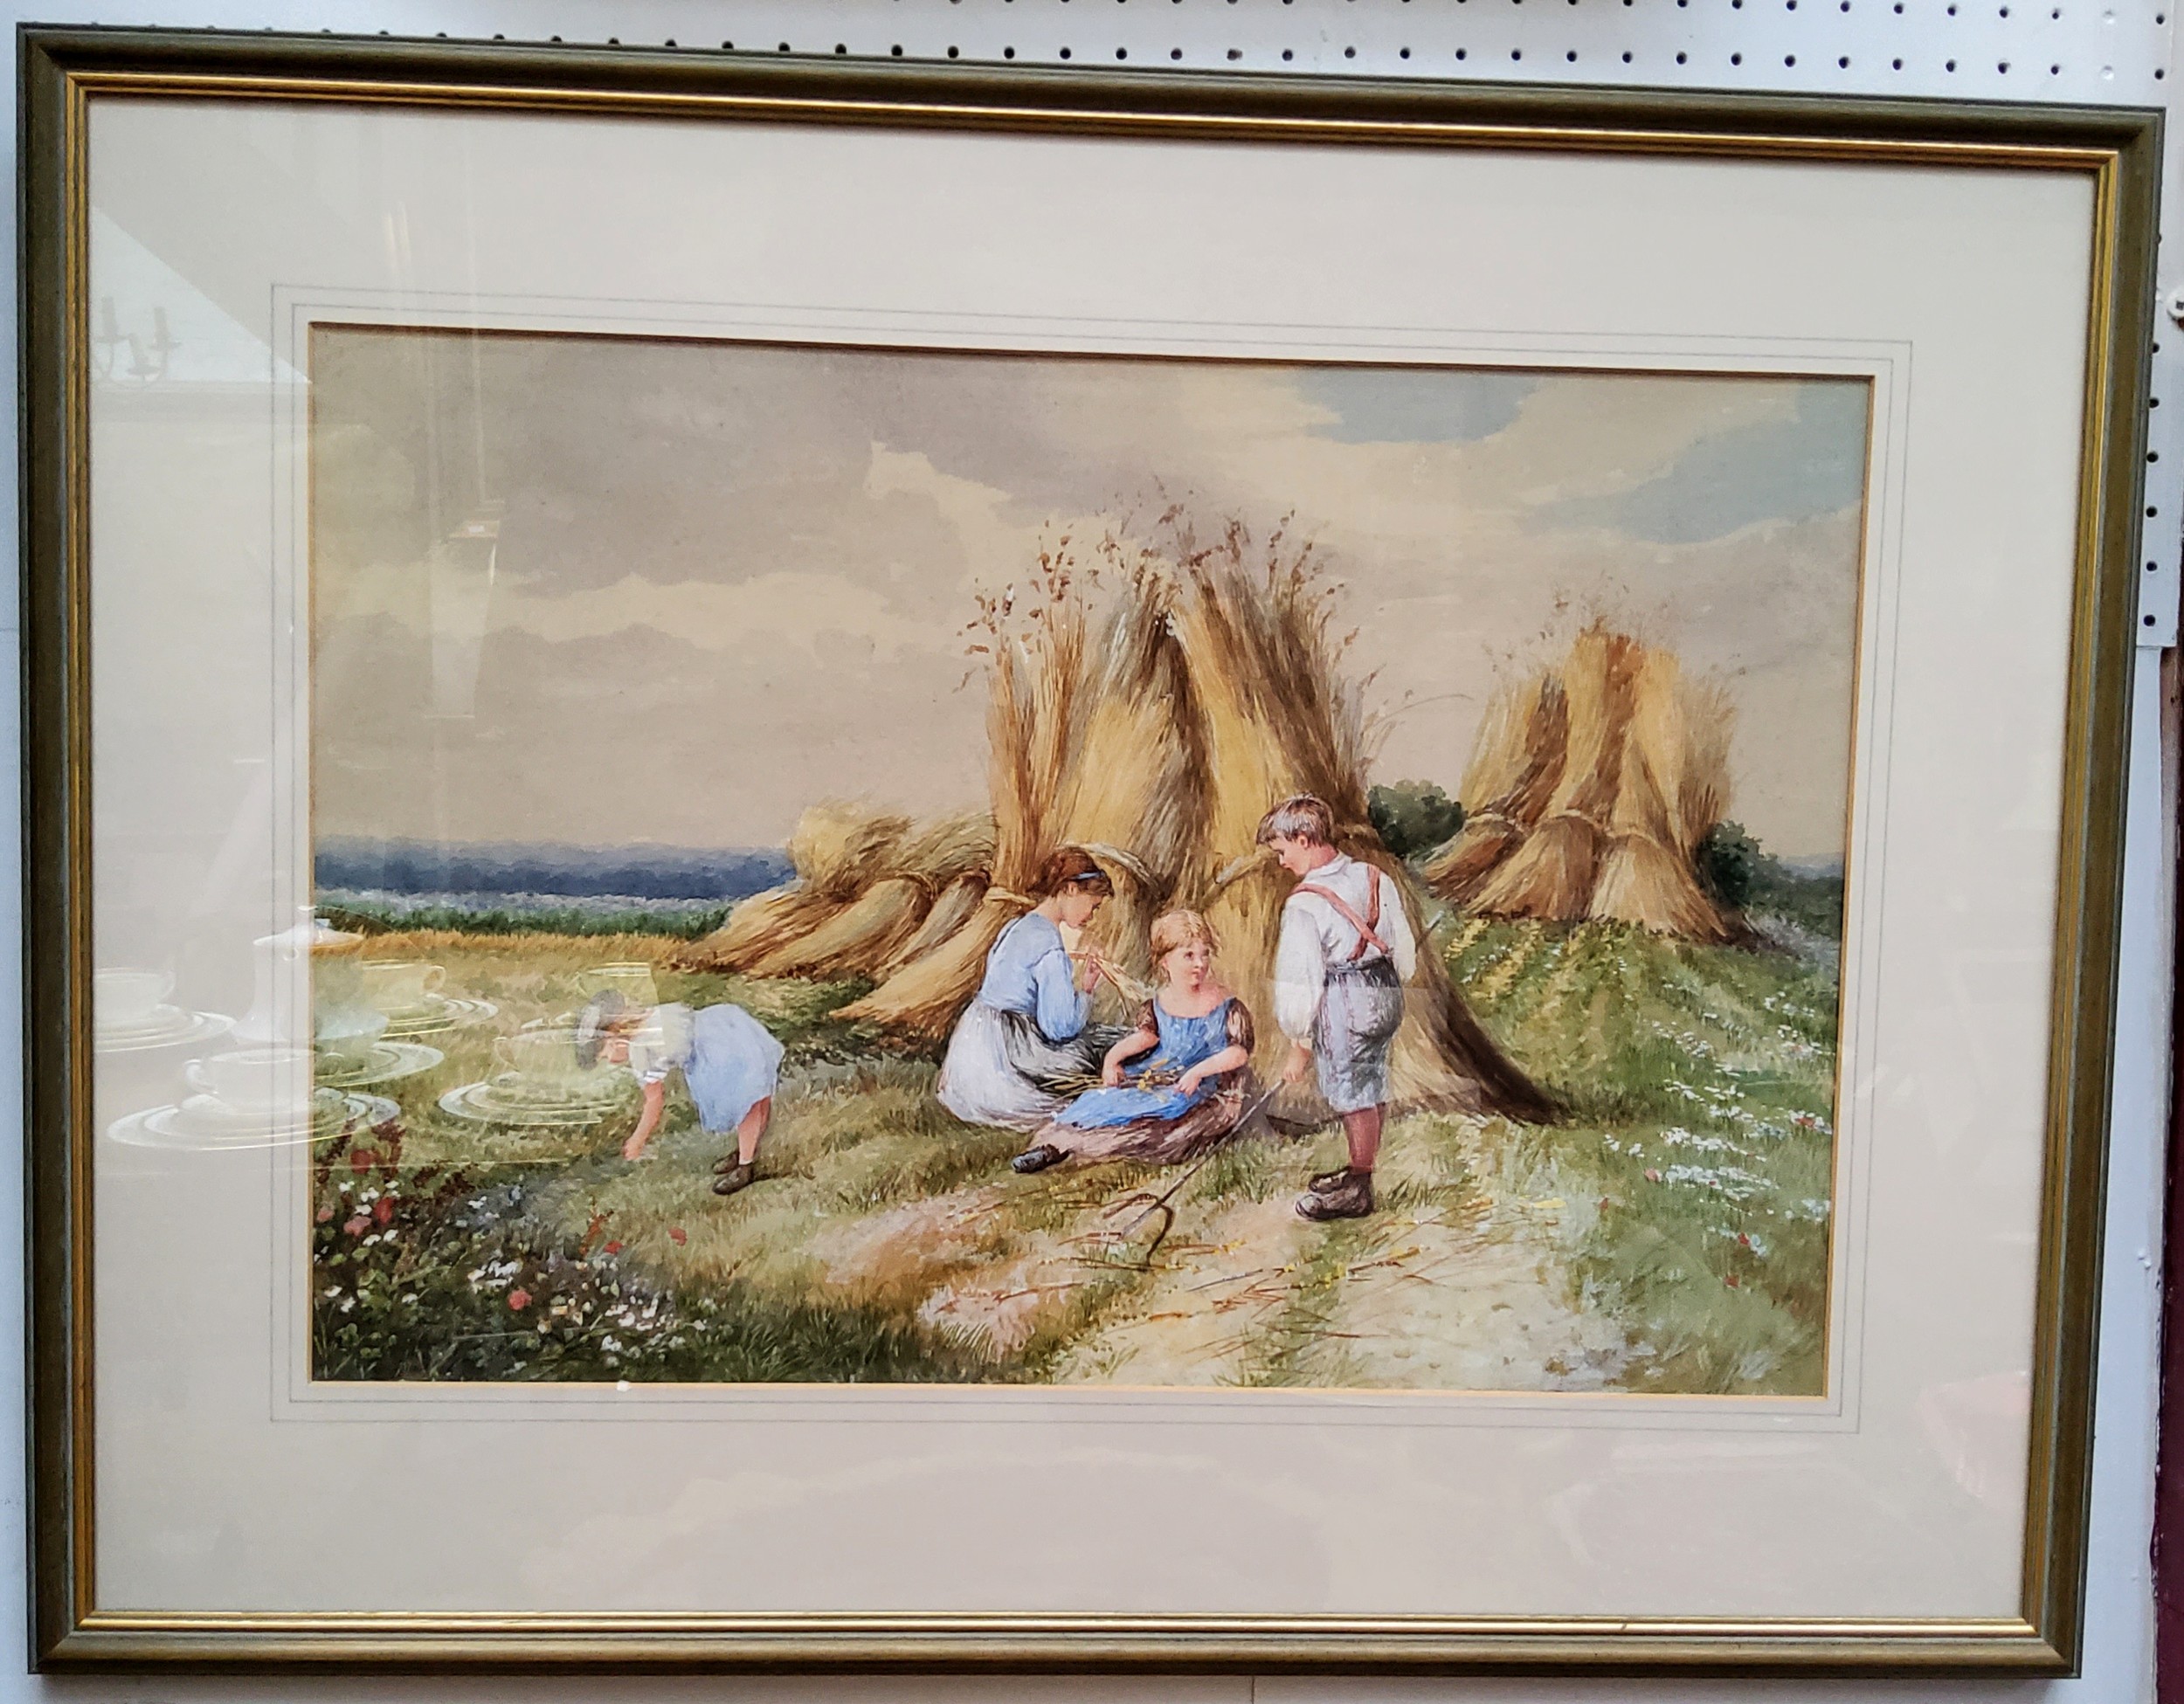 Manner of Miles Birkett Foster RWS (1825-1899) - 'Children Amongst The Hay', watercolour, 51cm x - Image 2 of 2